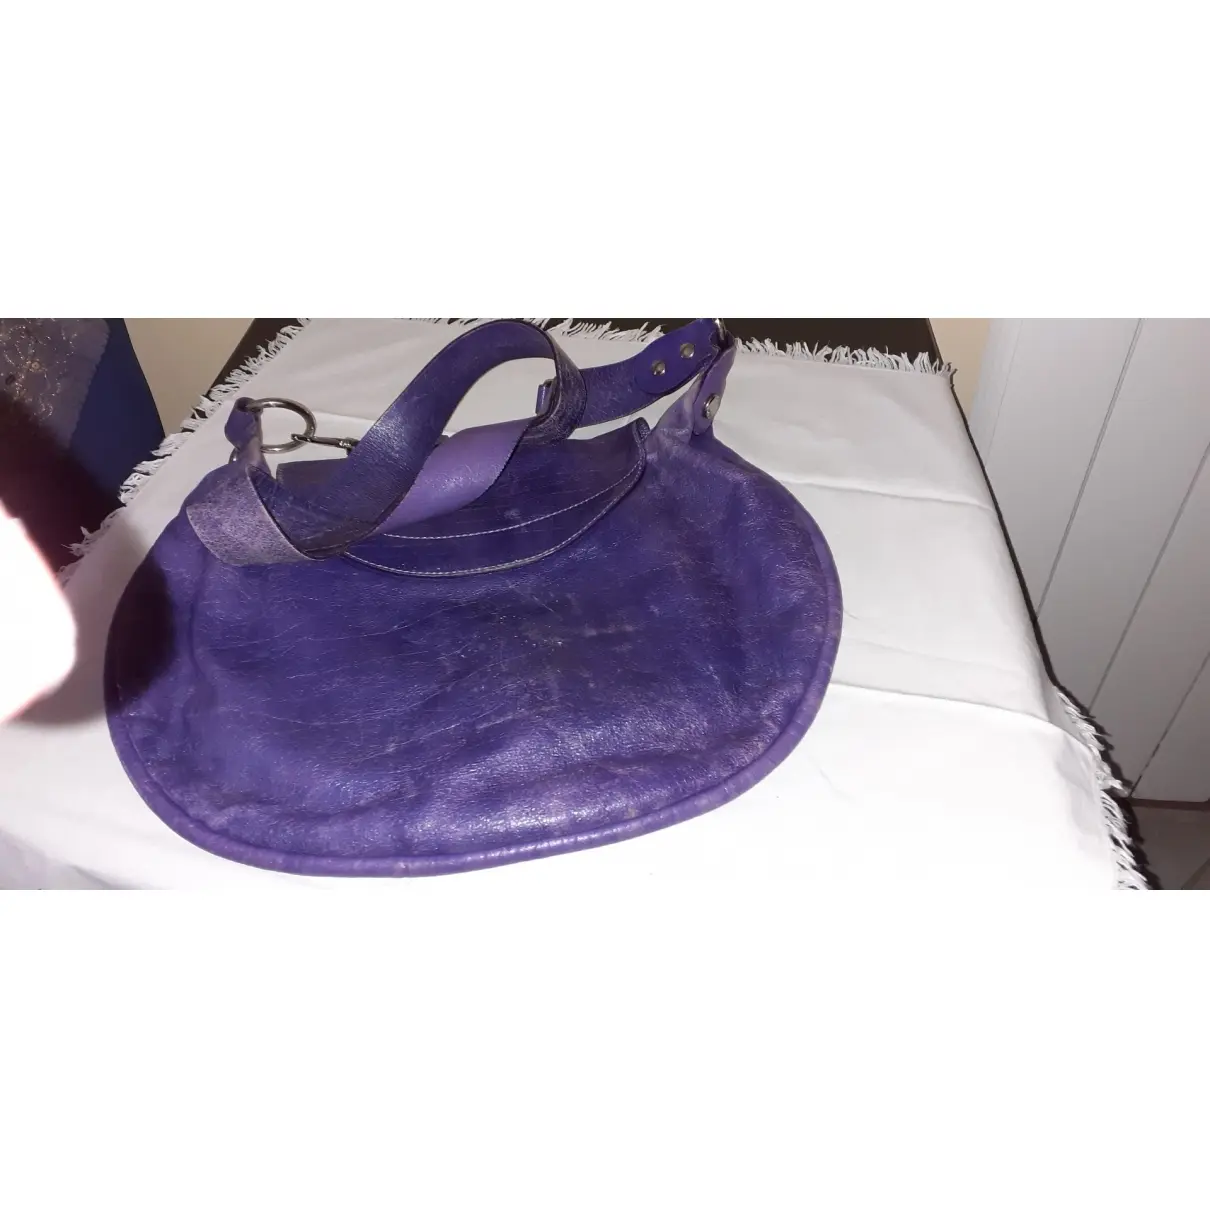 Hogan Leather handbag for sale